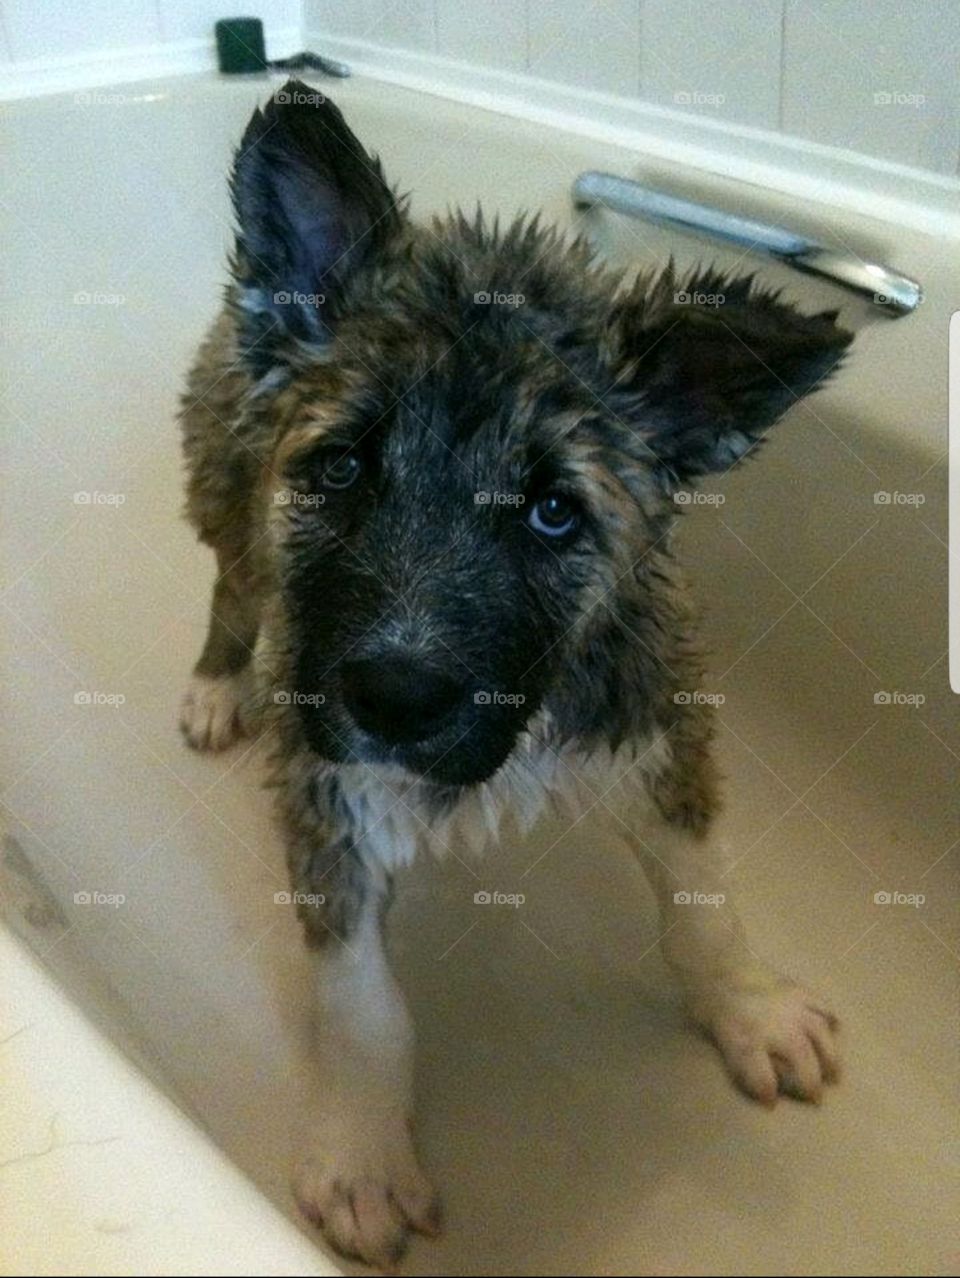 My Baby Having His First Bath